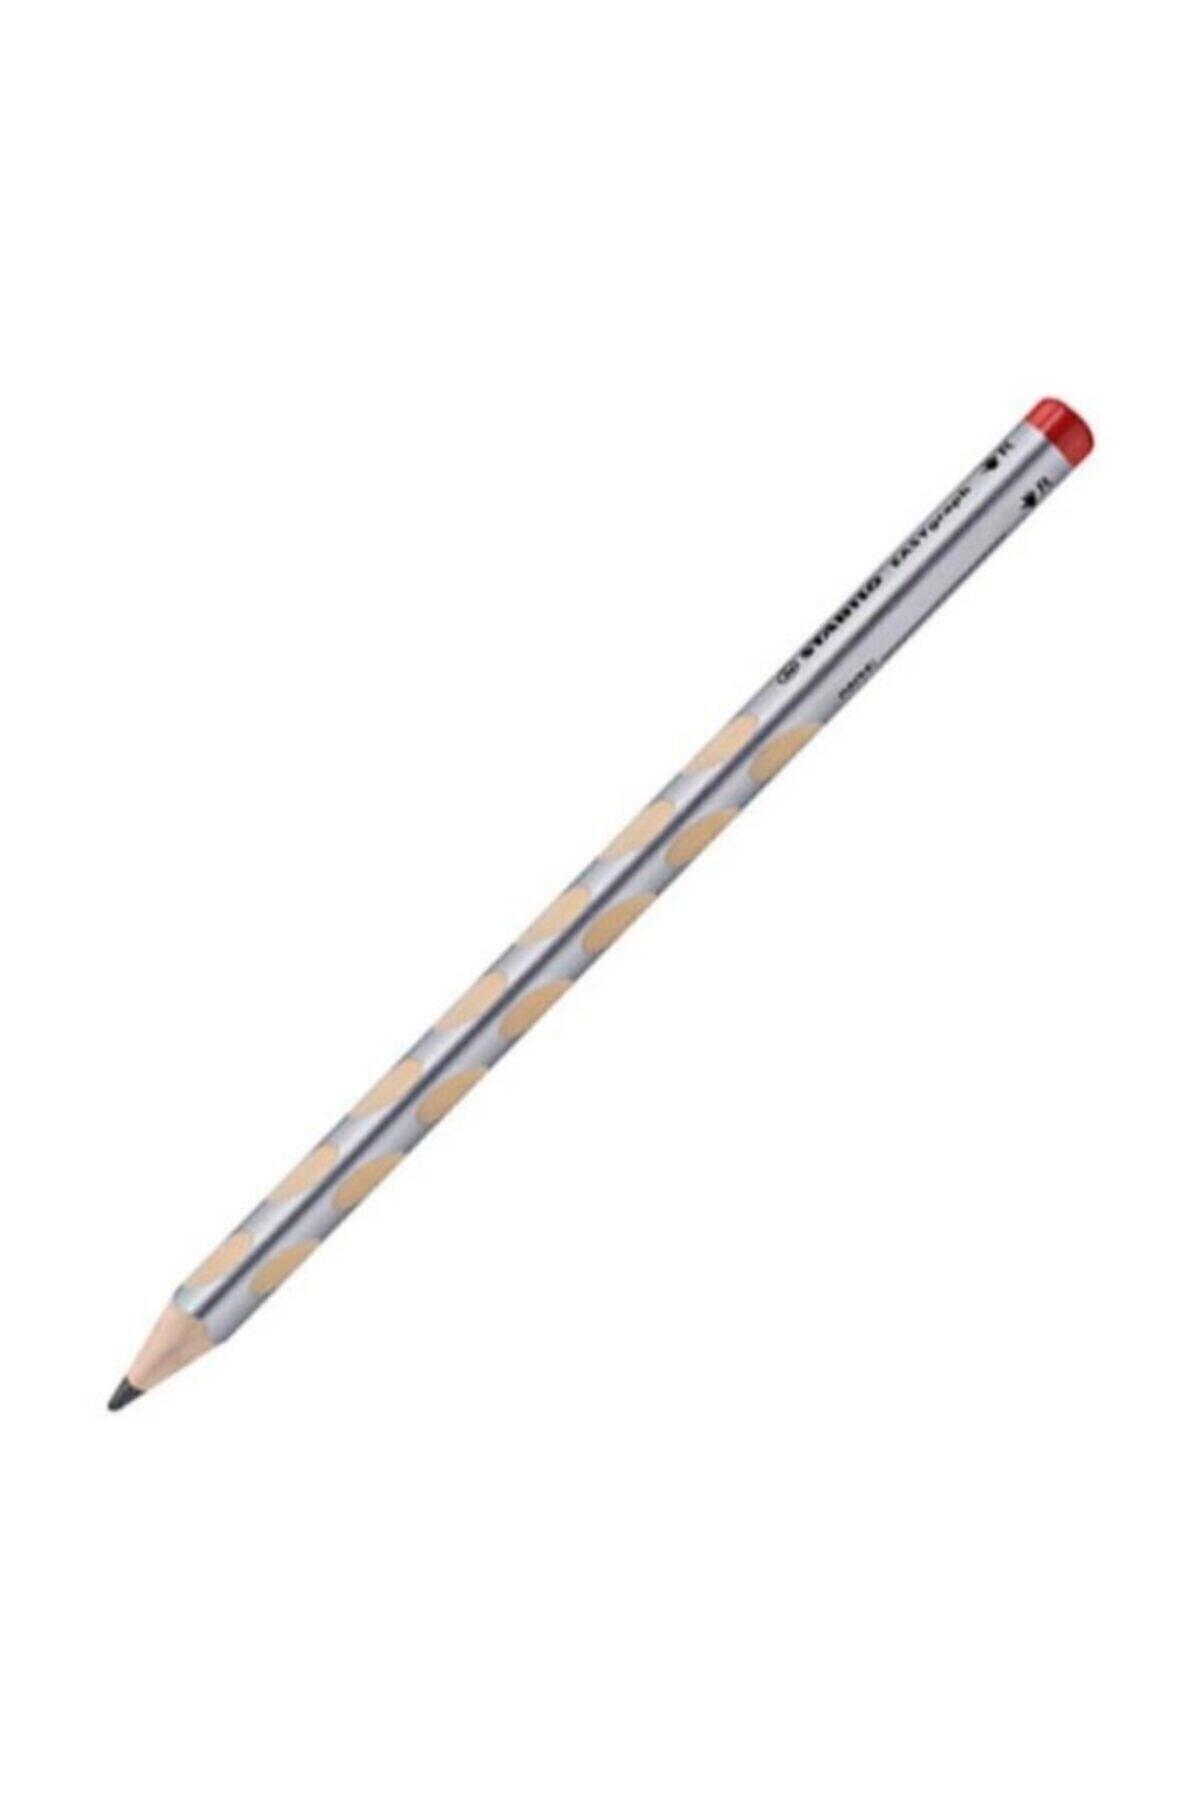 Easygraph Metallic Right Hand Pen Hb 322